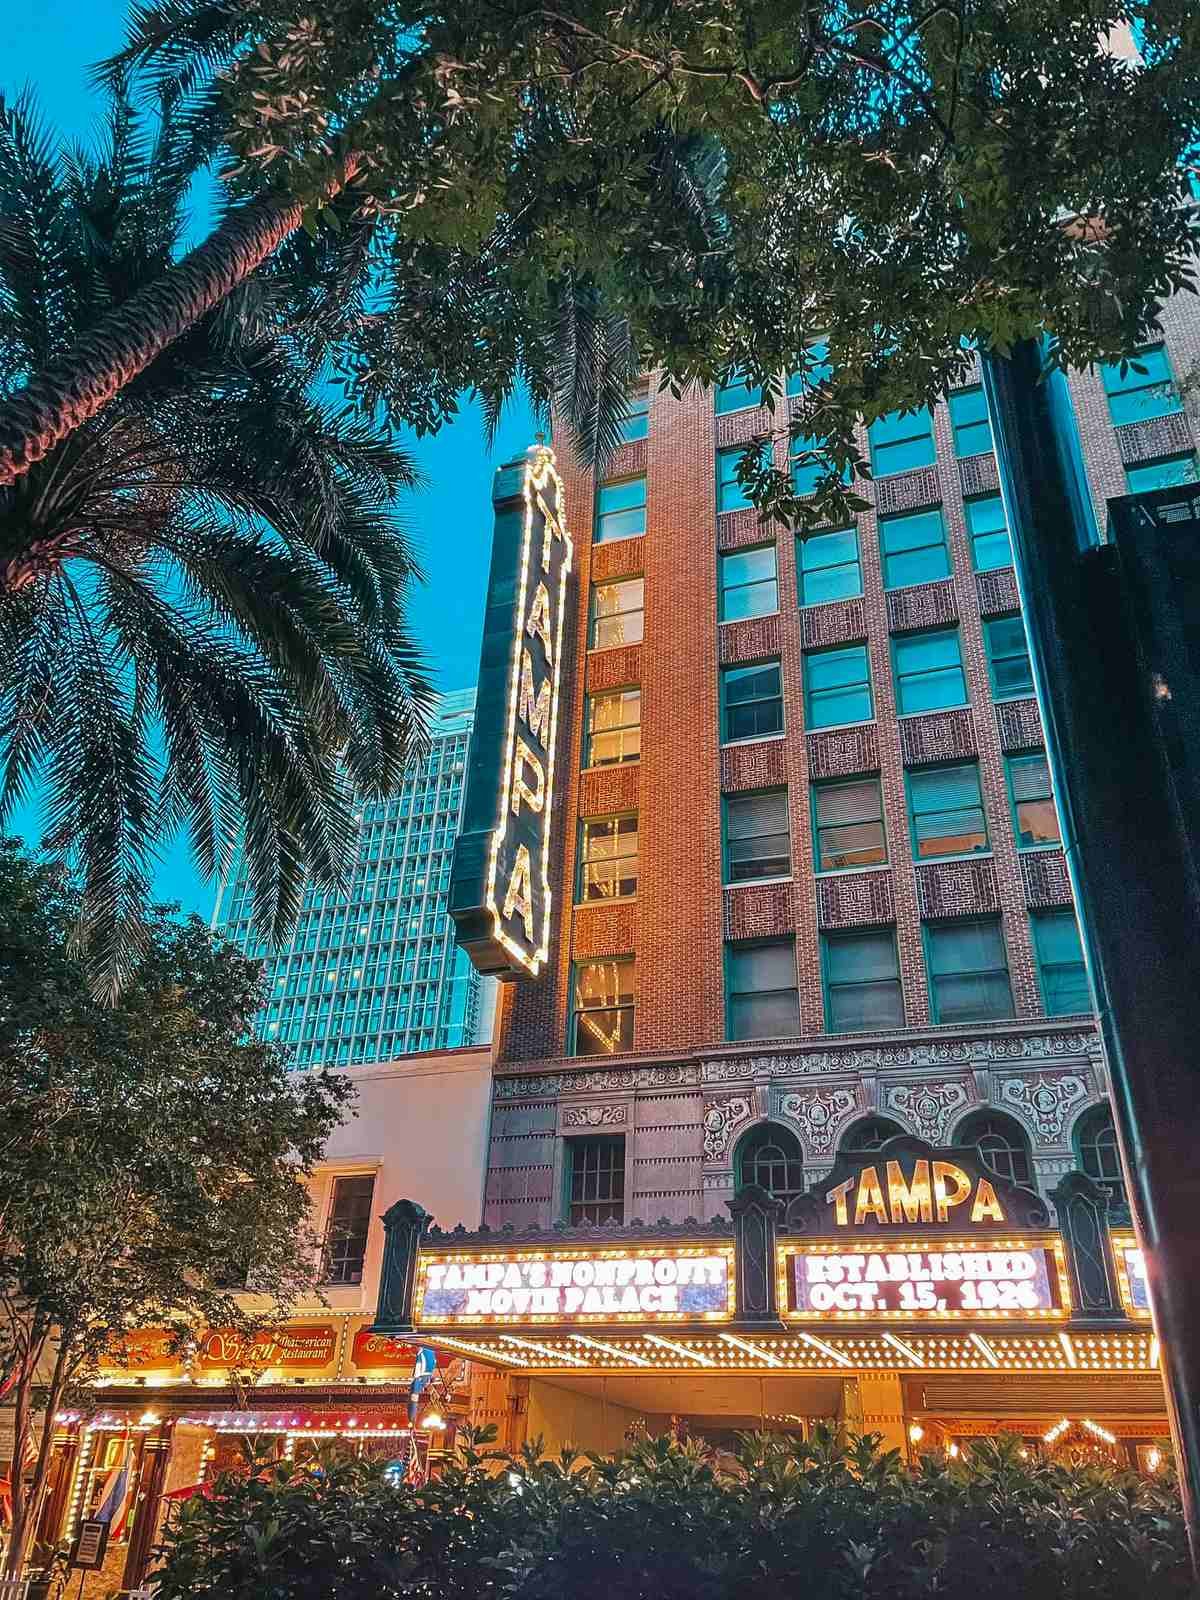 Tampa Theatre lit up at night